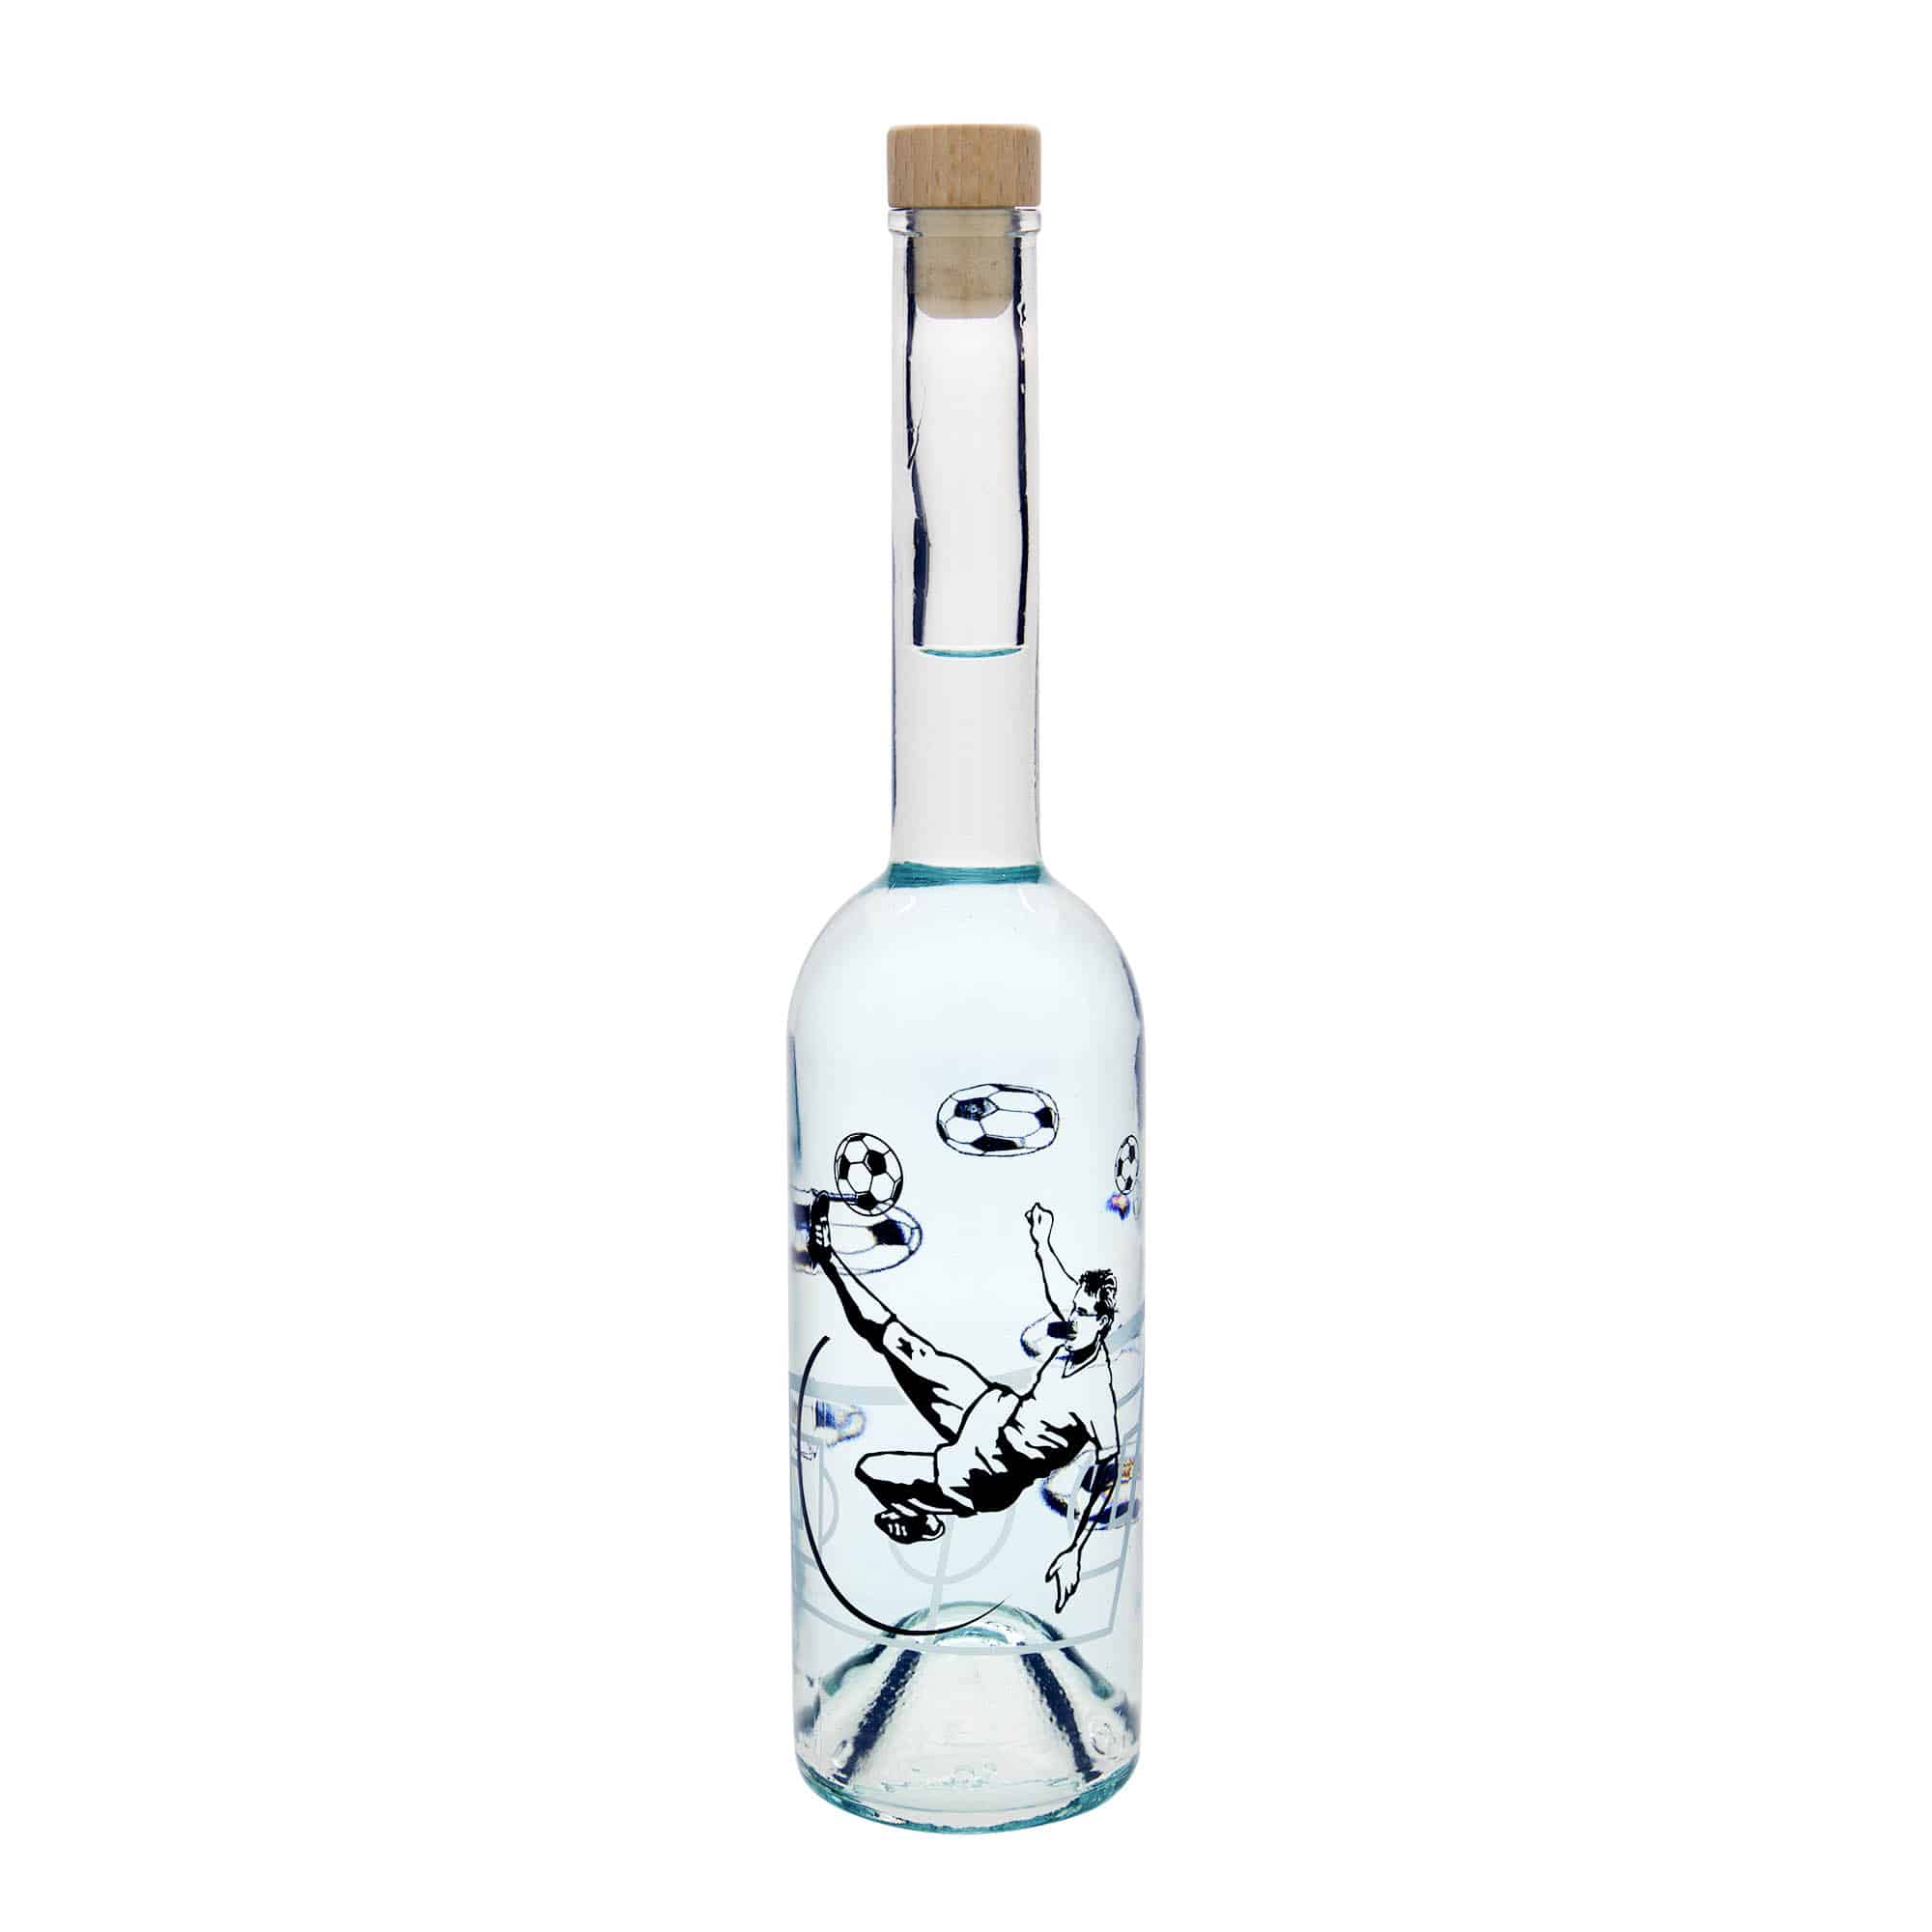 500 ml glass bottle 'Opera', print: footballer, closure: cork